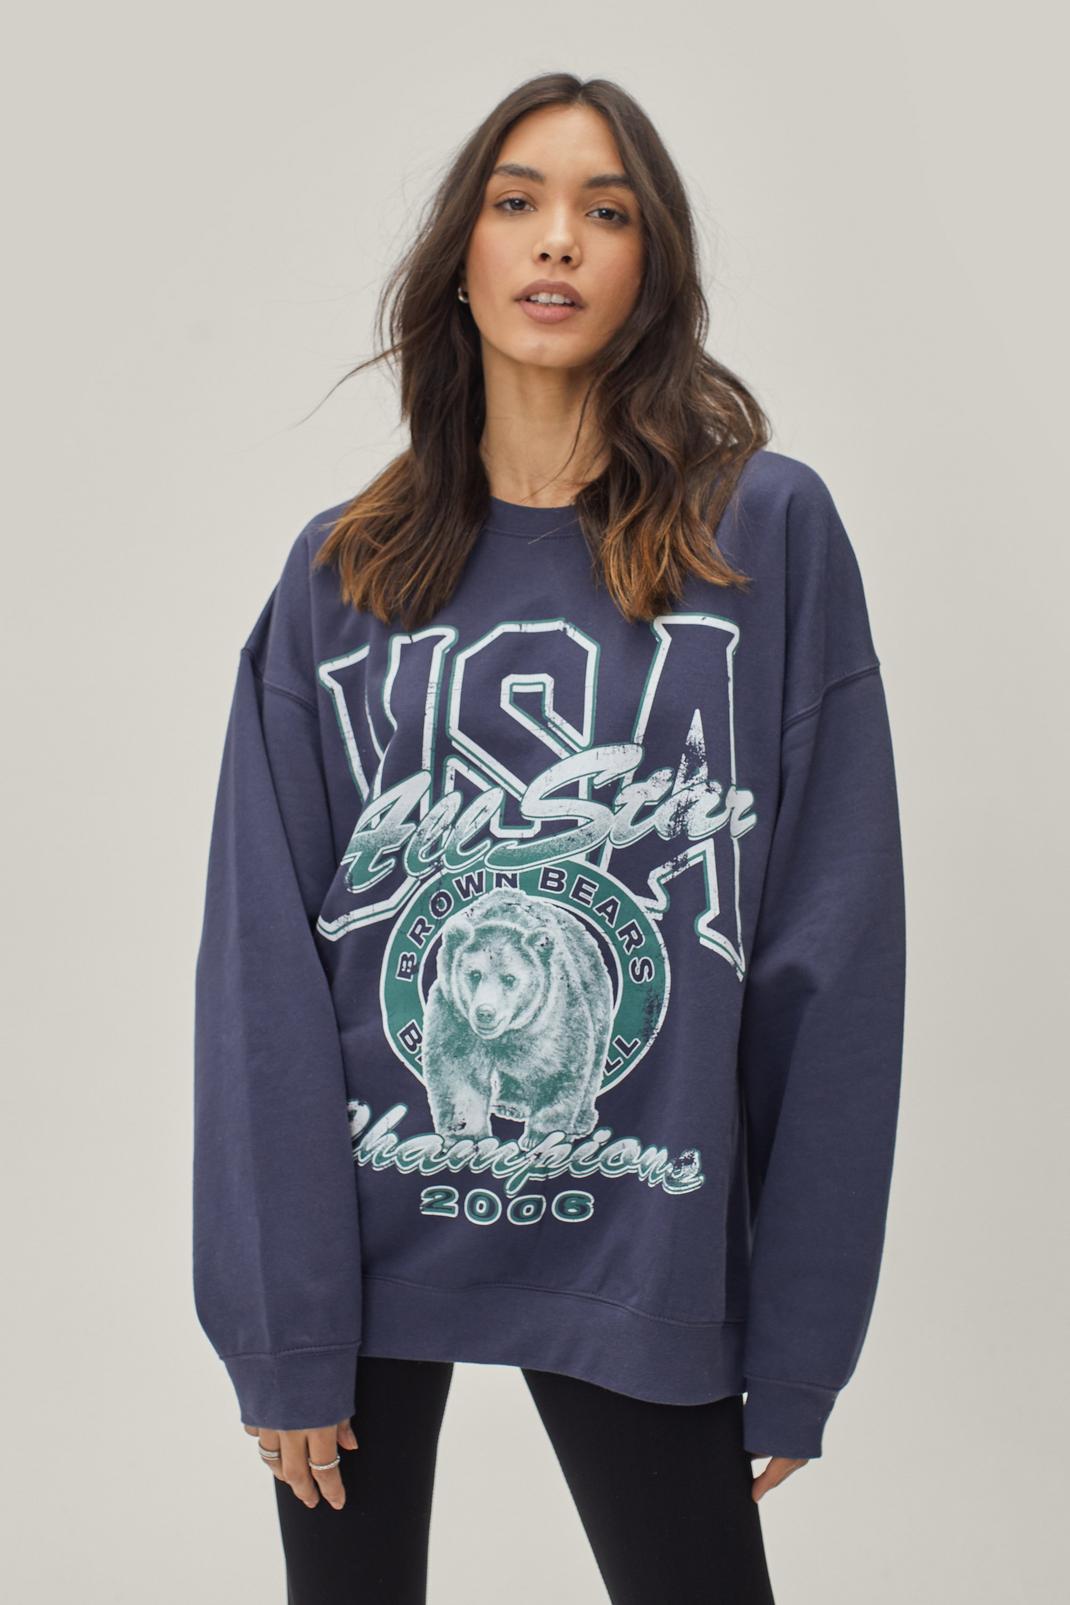 USA All Stars Oversized Graphic Sweatshirt, Navy image number 1